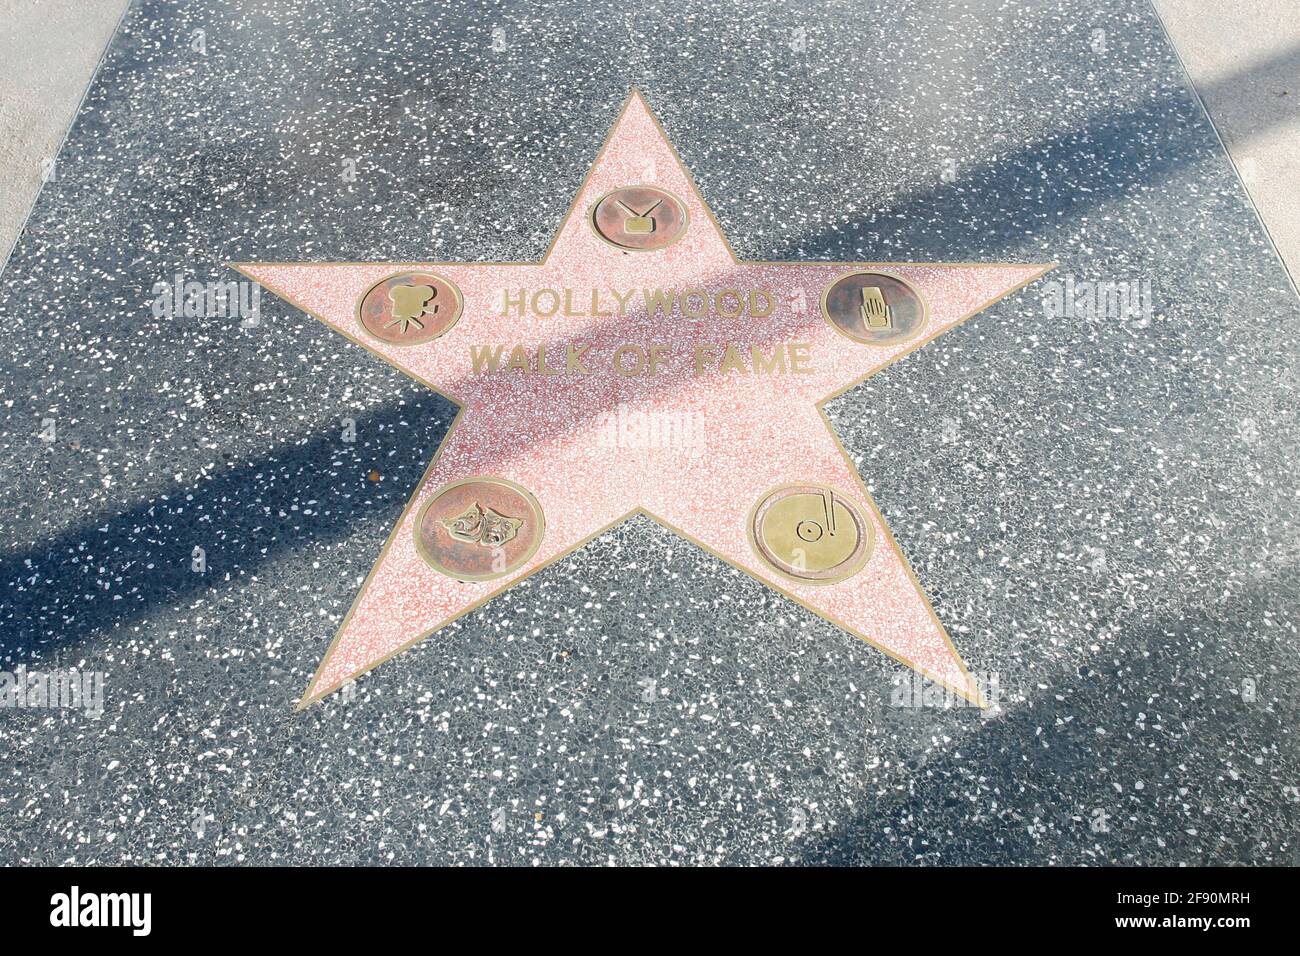 Hollywood Walk of Fame Entrance Star, Los Angeles, California, USA Stock Photo